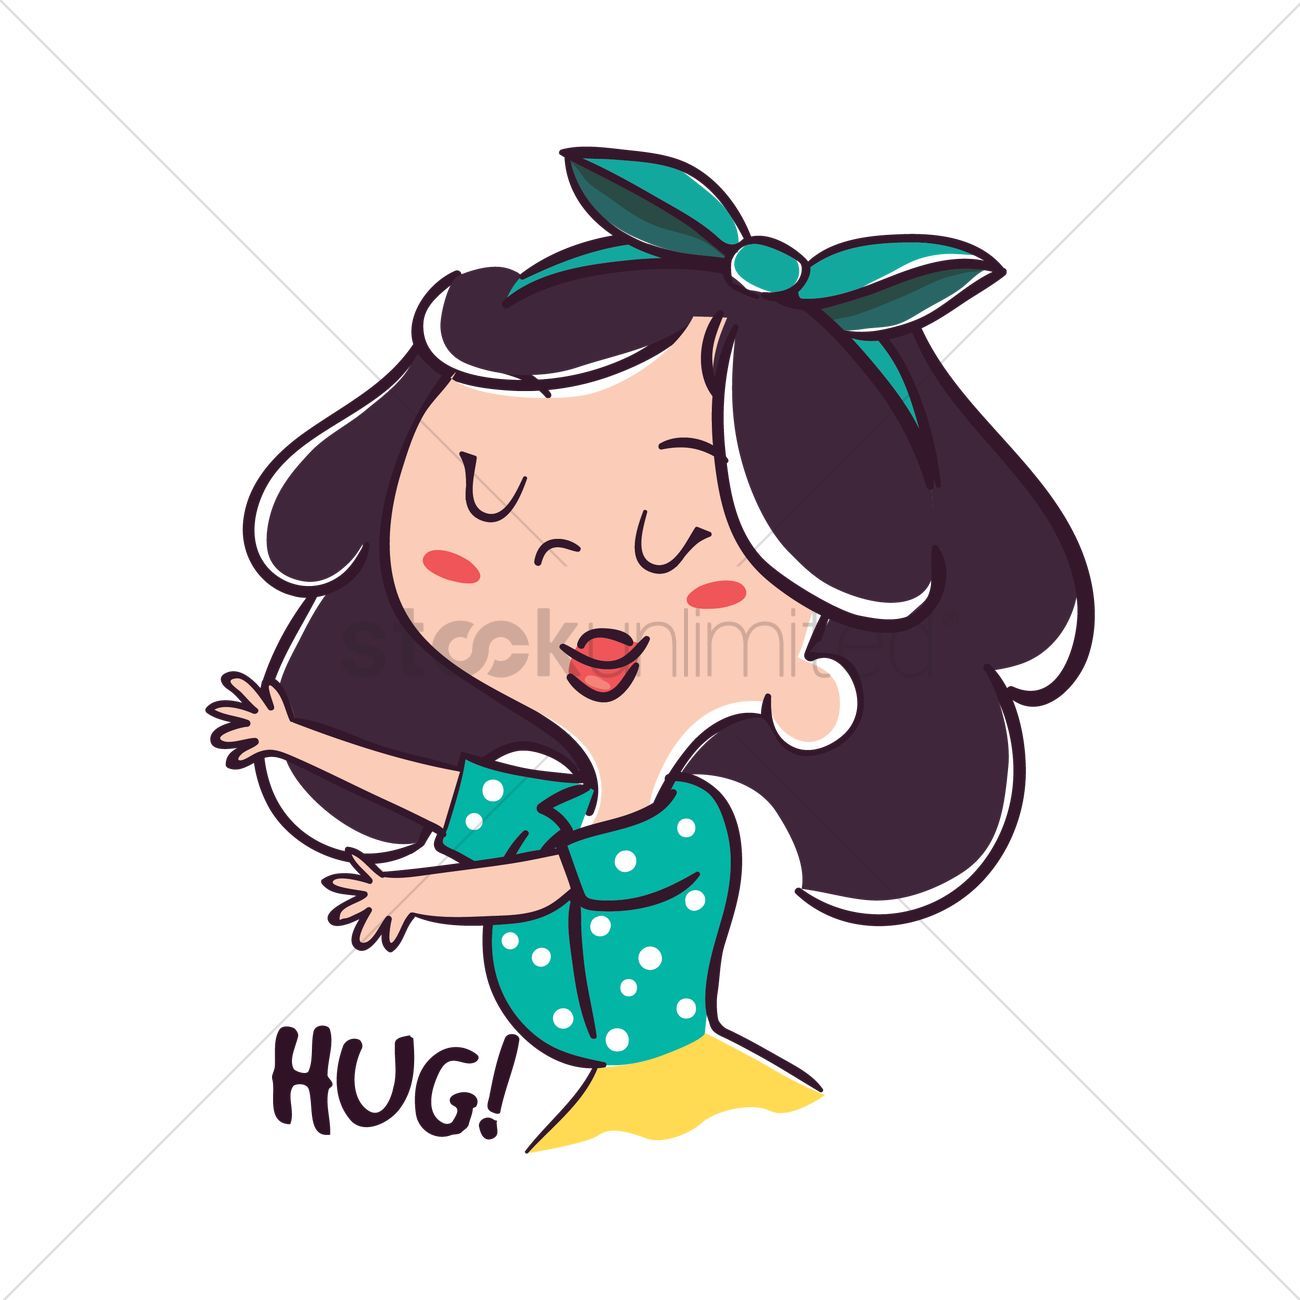 Cartoon girl gesturing for hug vectors, stock clipart.